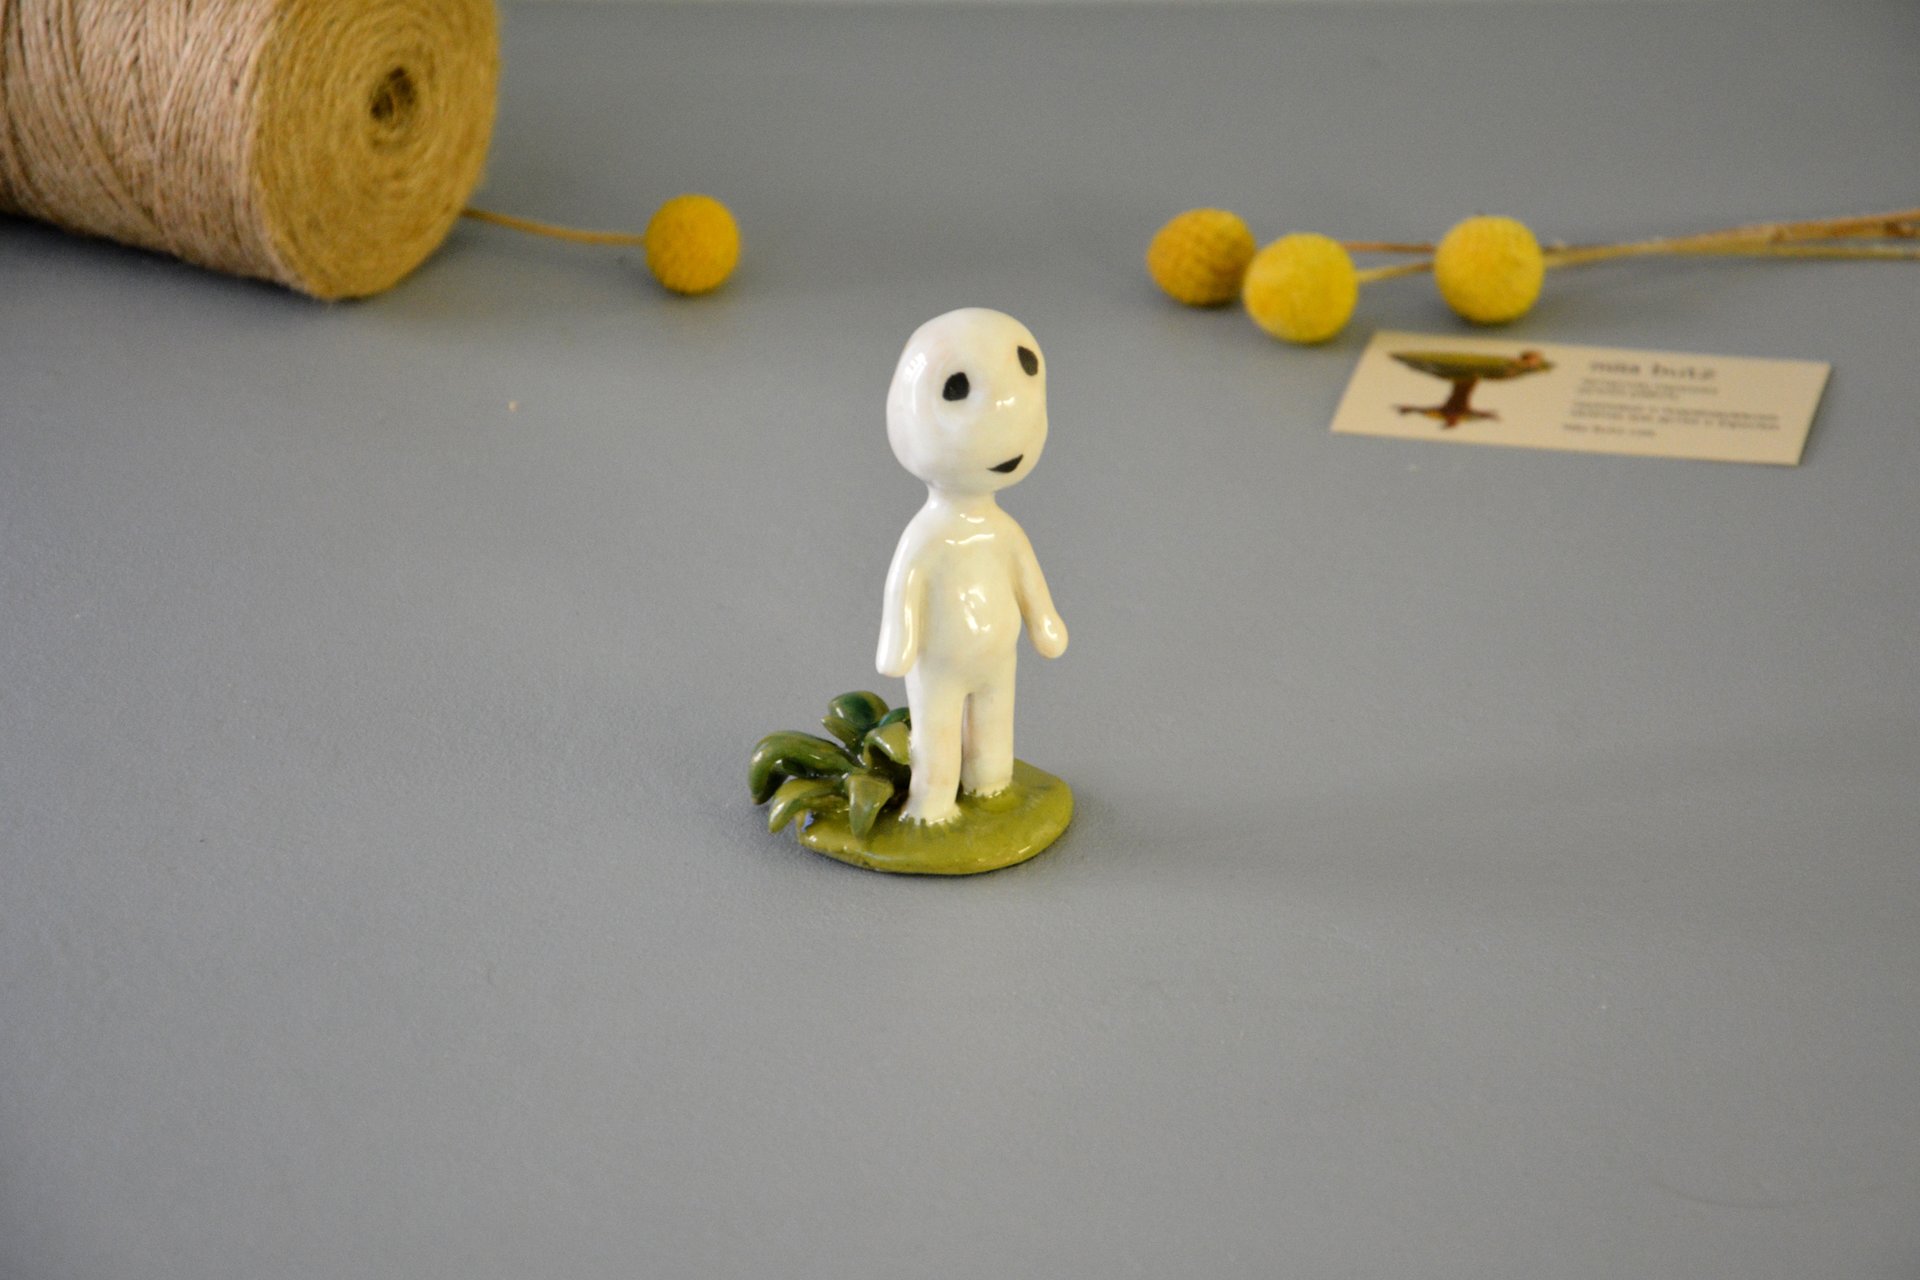 A figurine of a smiling Kodama tree spirit, height - 9.5 cm, photo 2 of 7.